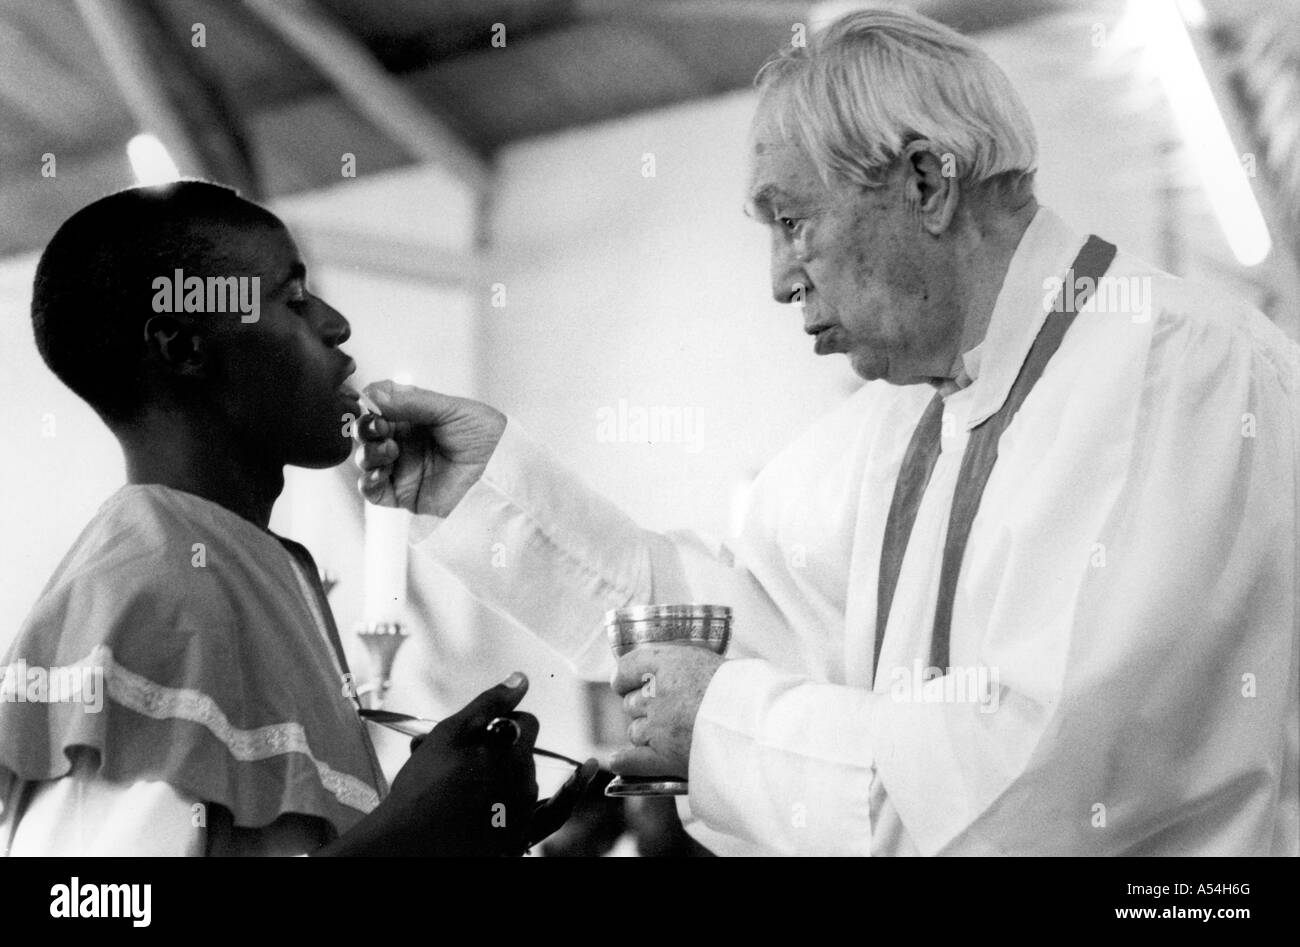 Painet hq1495 black and white religion american missionary giving sacrament man sunday mass shinyanga tanzania images bw Stock Photo